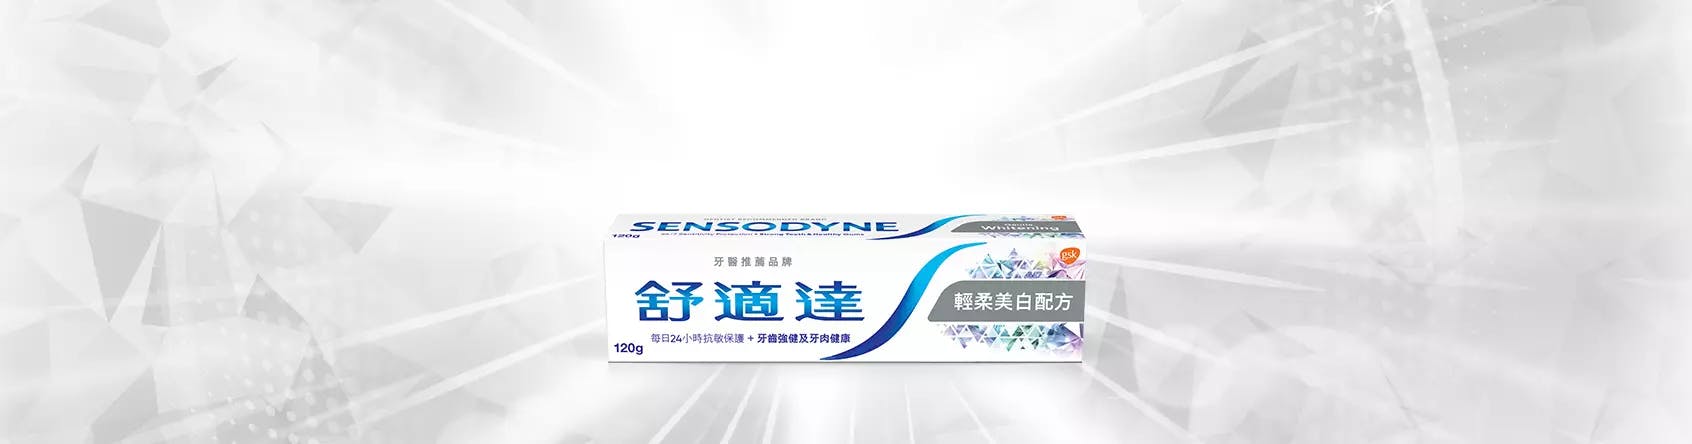 Sensodyne Extra Whitening campaign banner